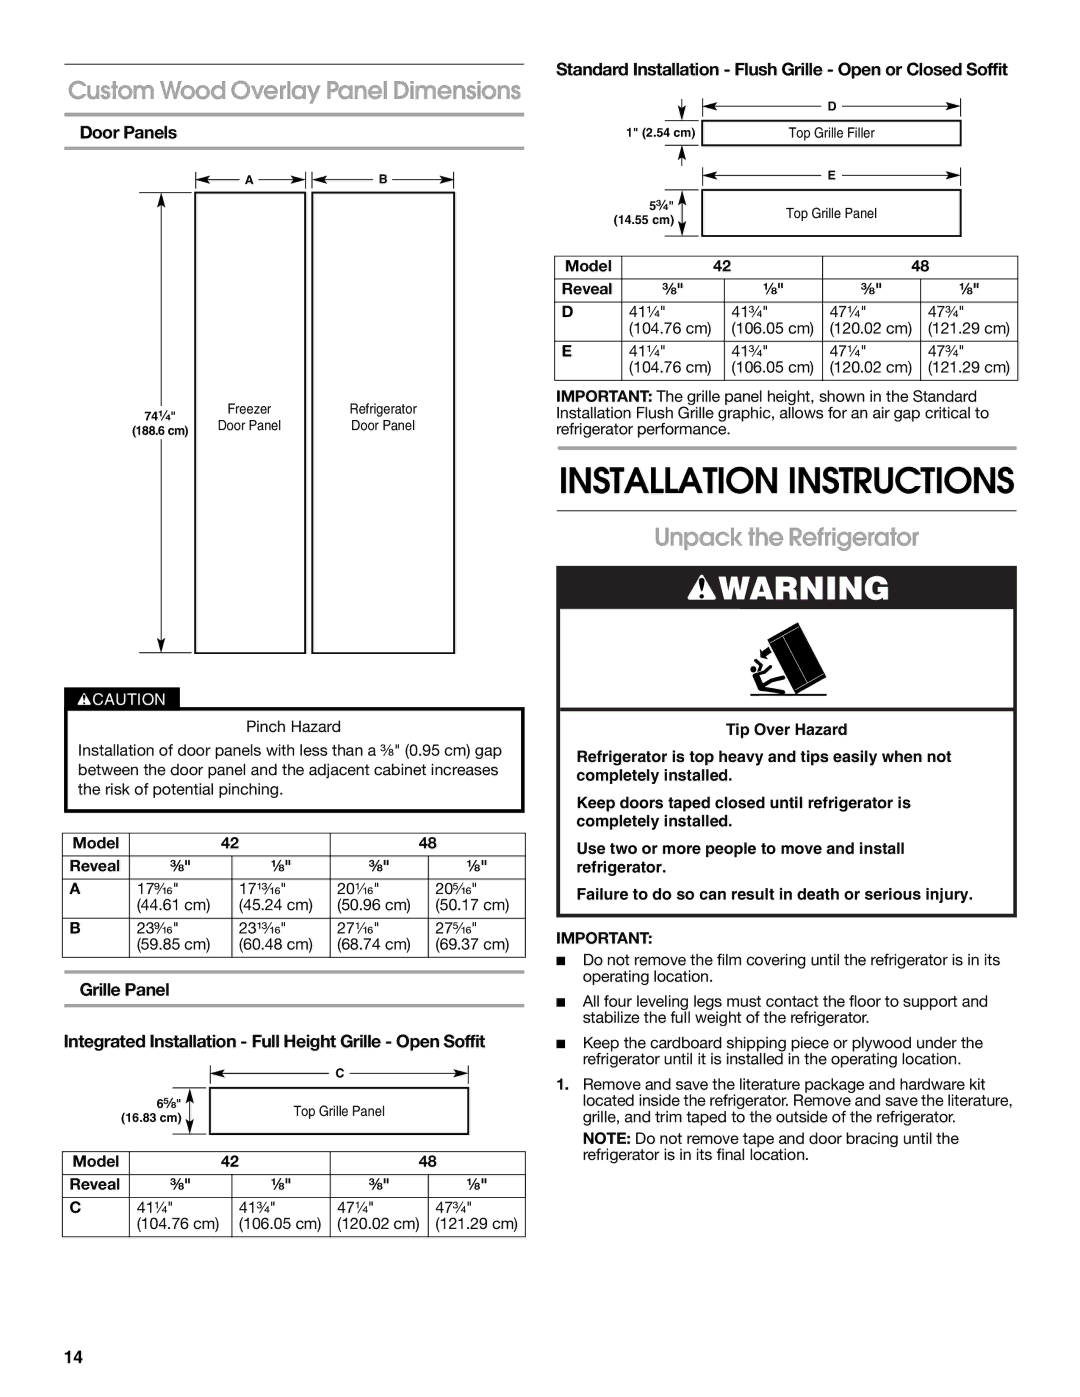 Jenn-Air W10379136A manual Custom Wood Overlay Panel Dimensions, Unpack the Refrigerator, Door Panels, Model Reveal ³⁄₈ ¹⁄₈ 